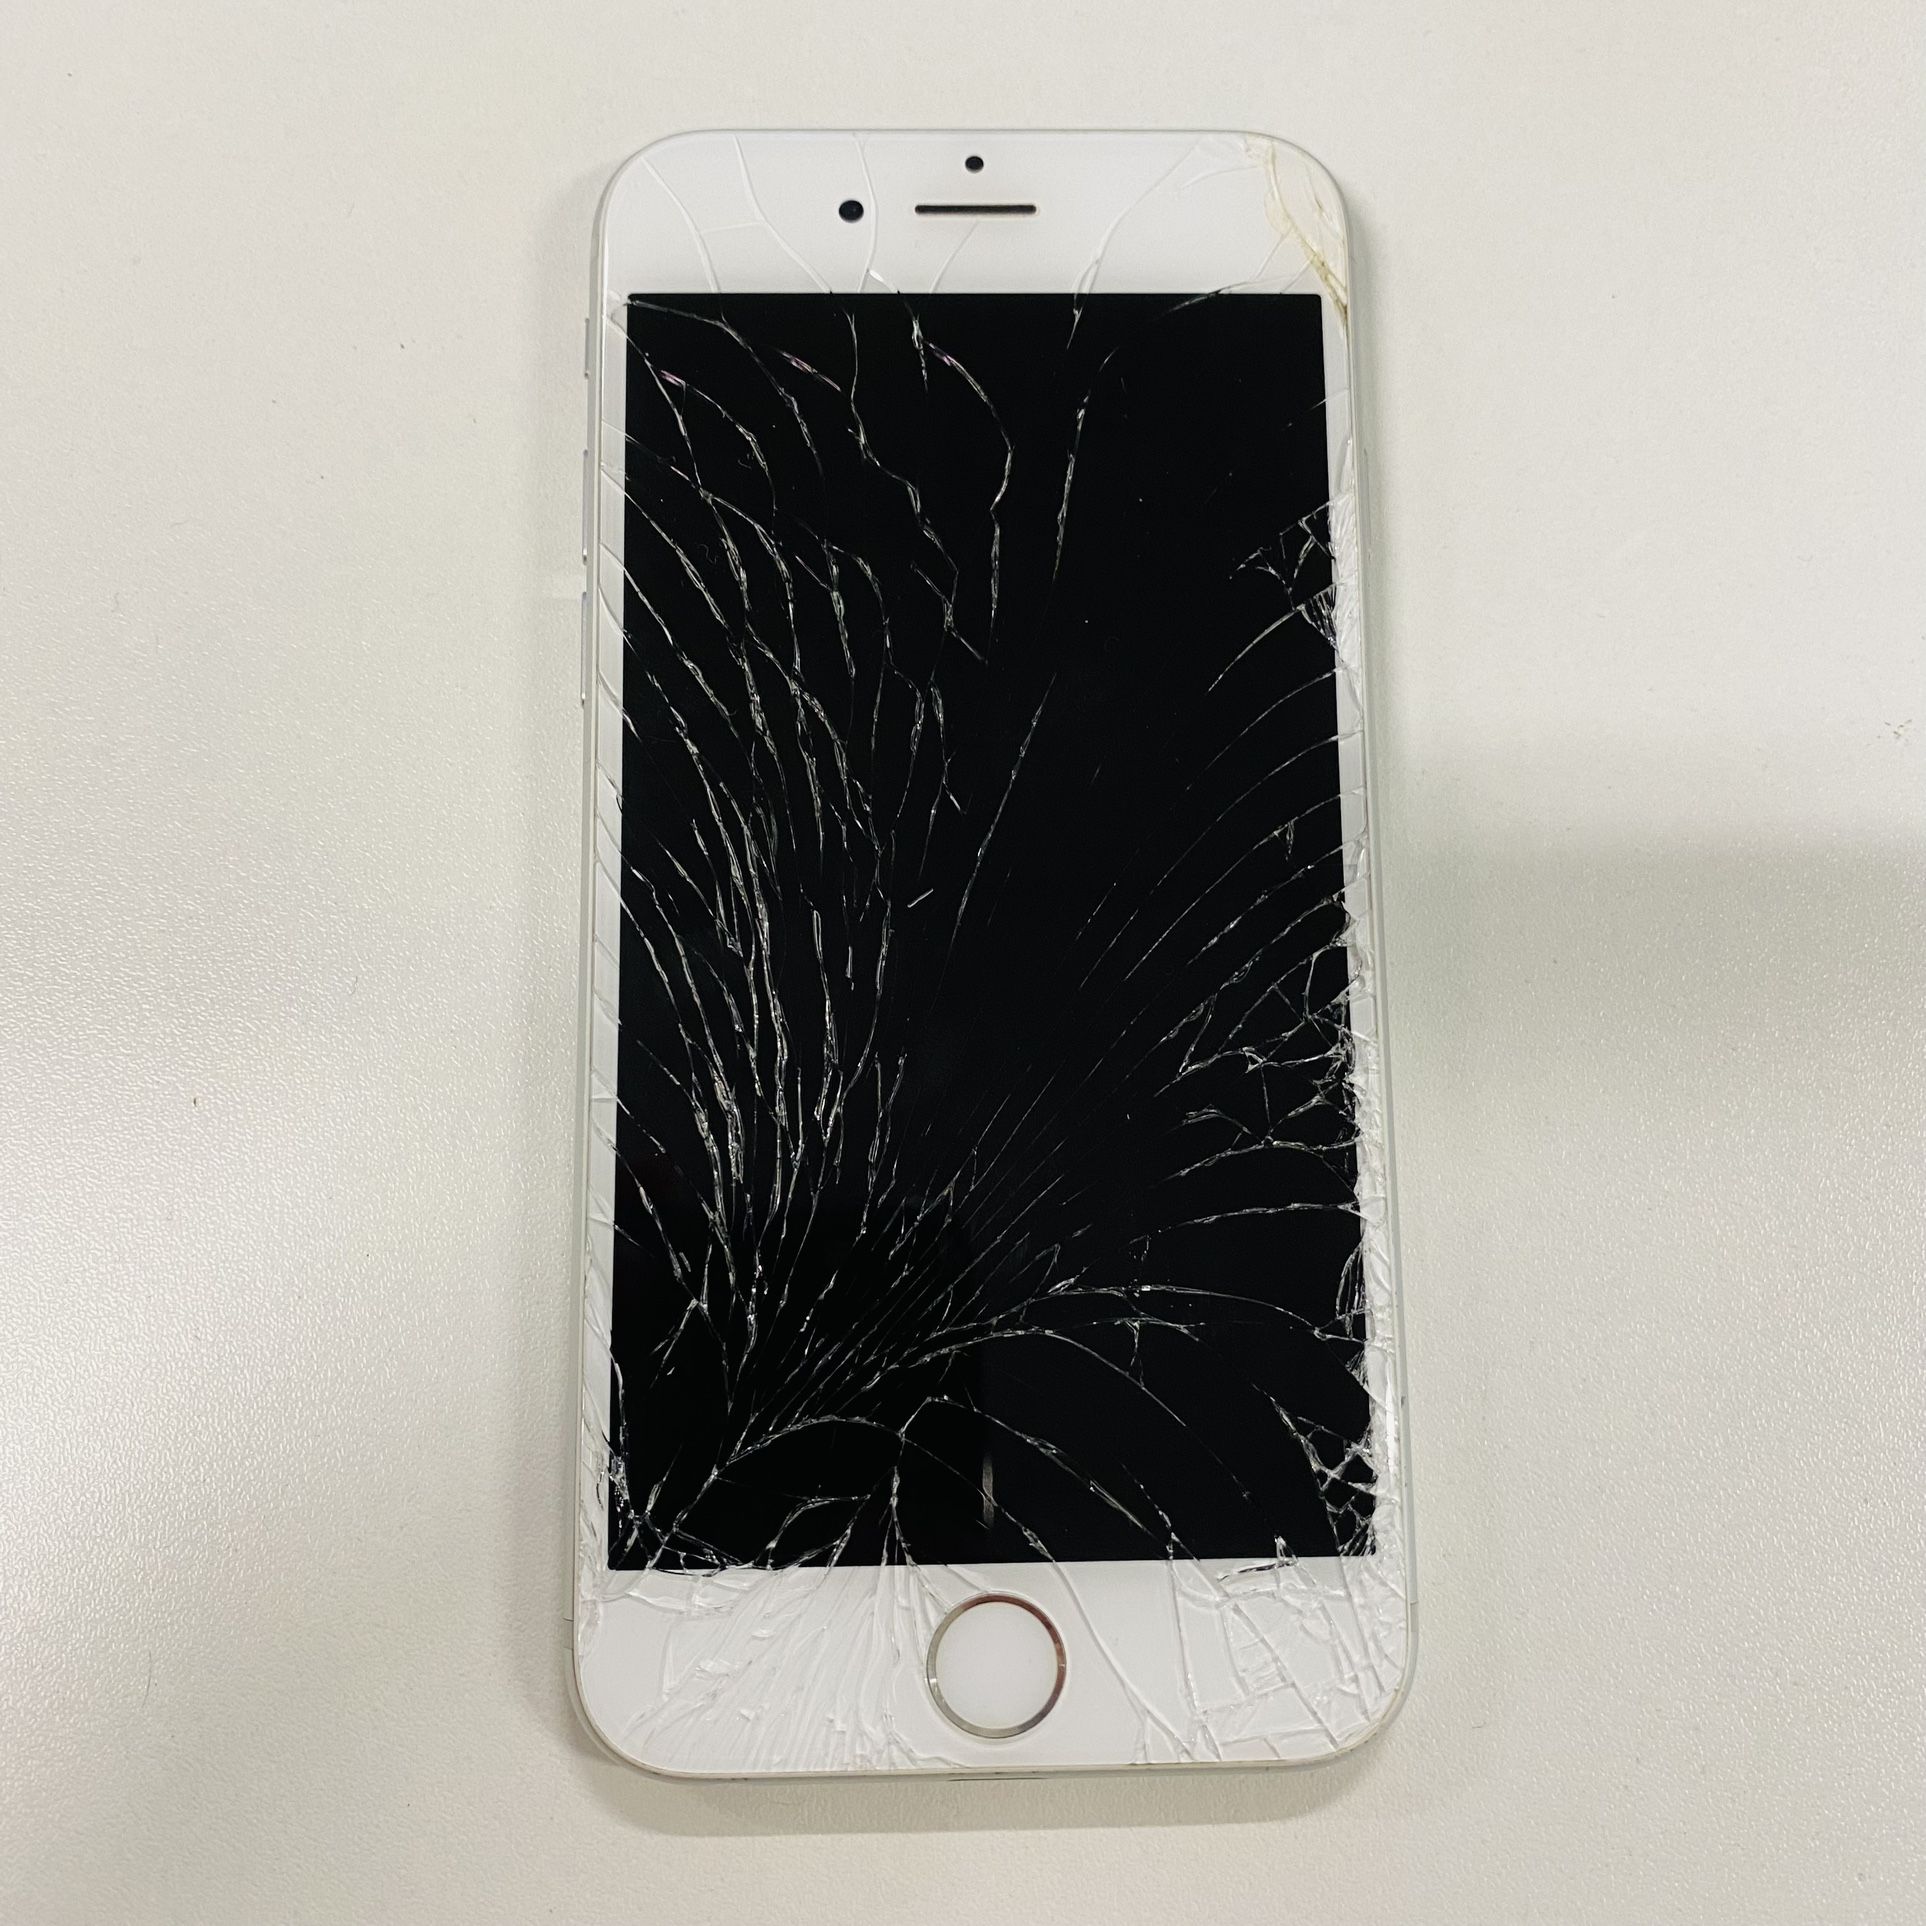 iPhone 6 16GB Silver - UNLOCKED